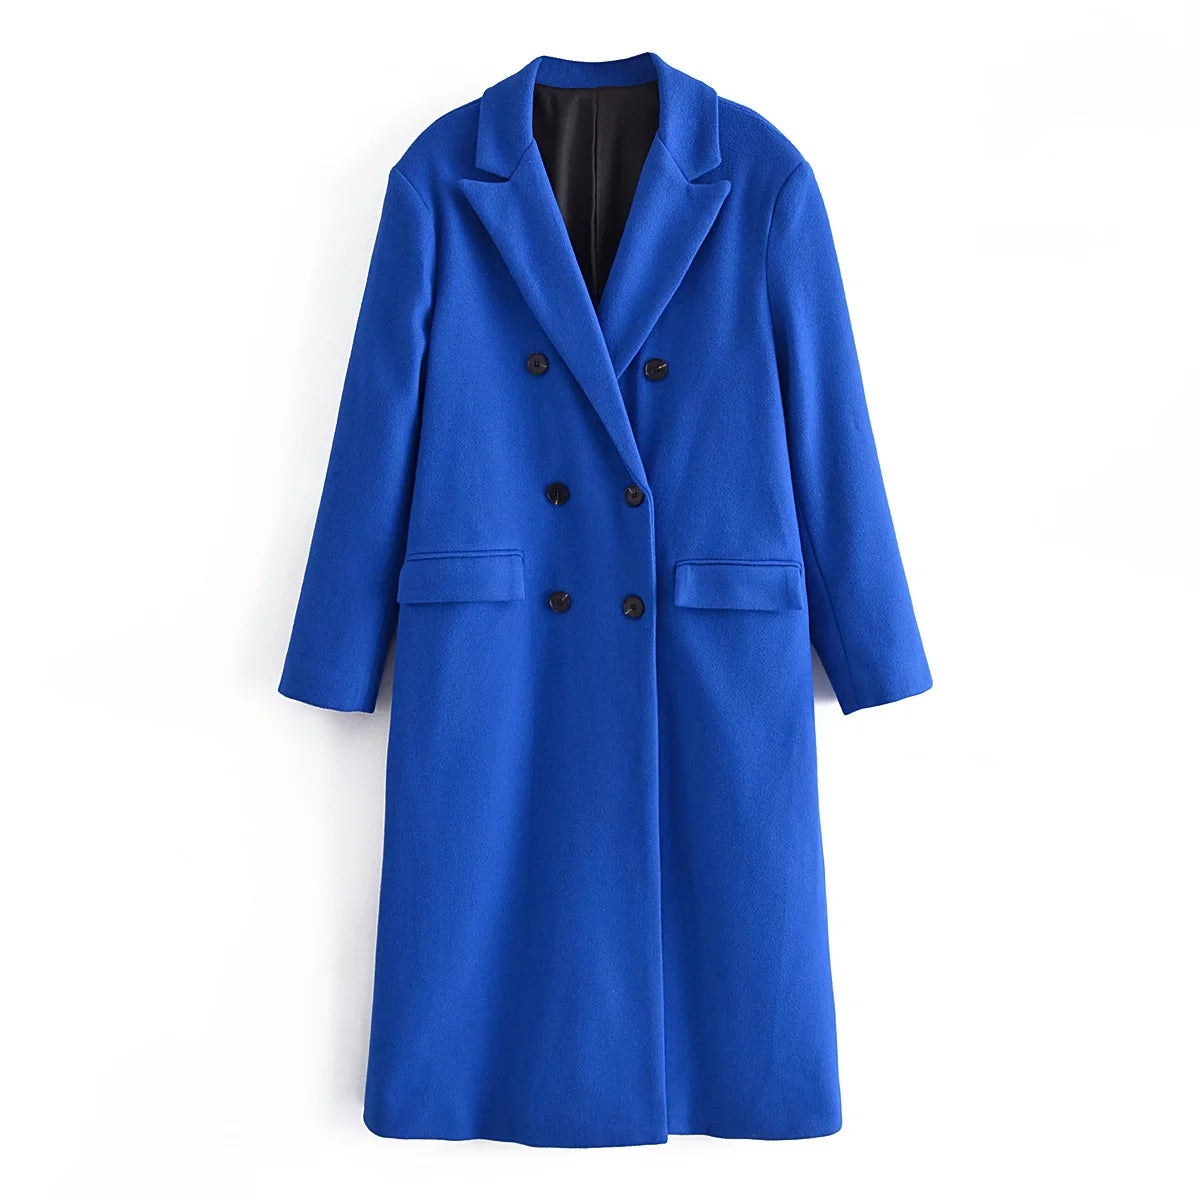 Blue Line coat